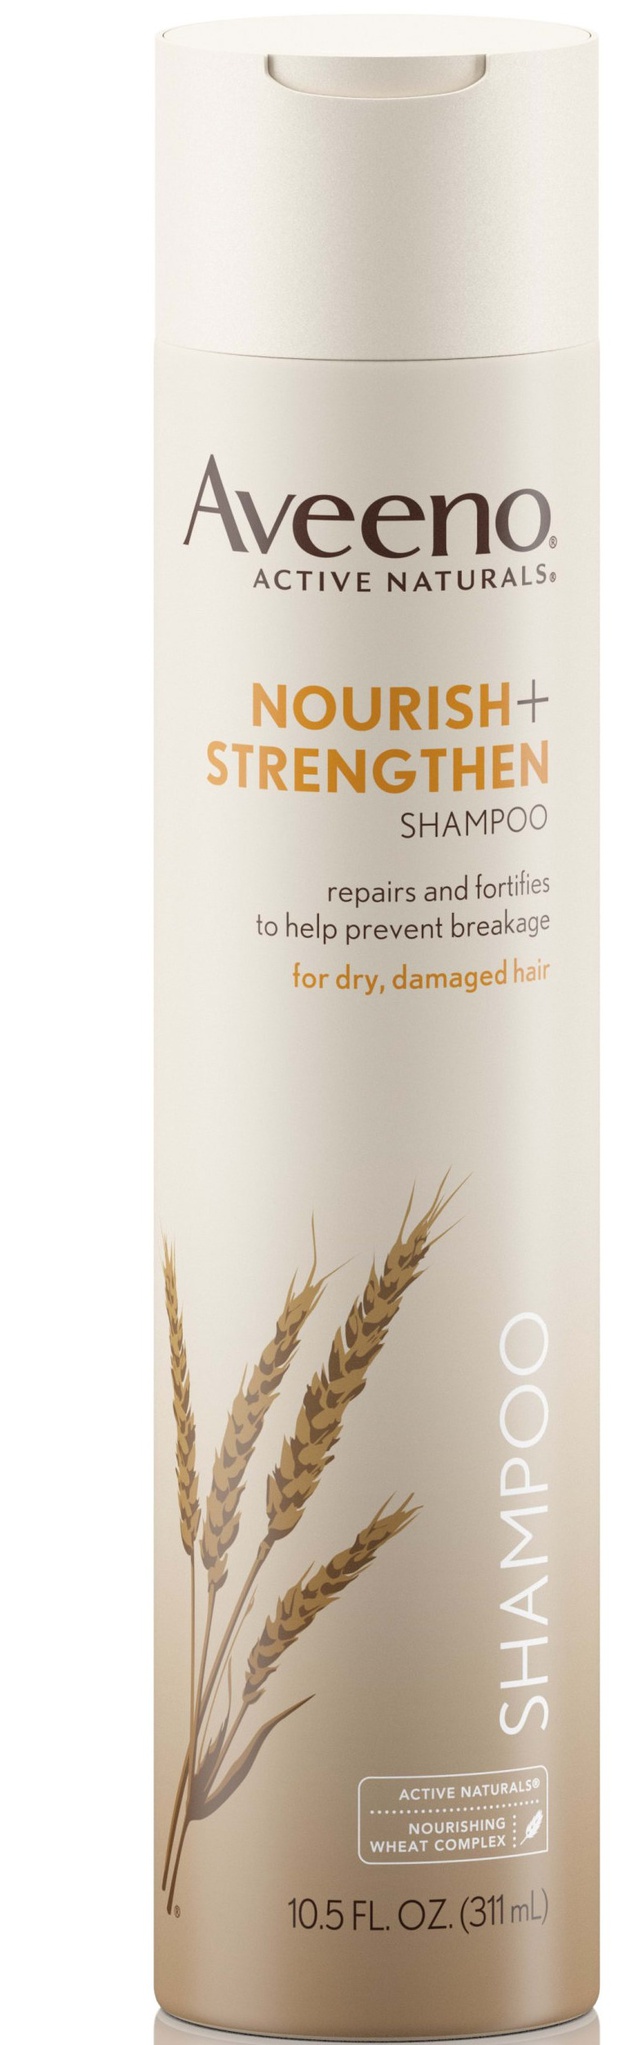 Aveeno Nourish + Strength Shampoo For Damaged Hair